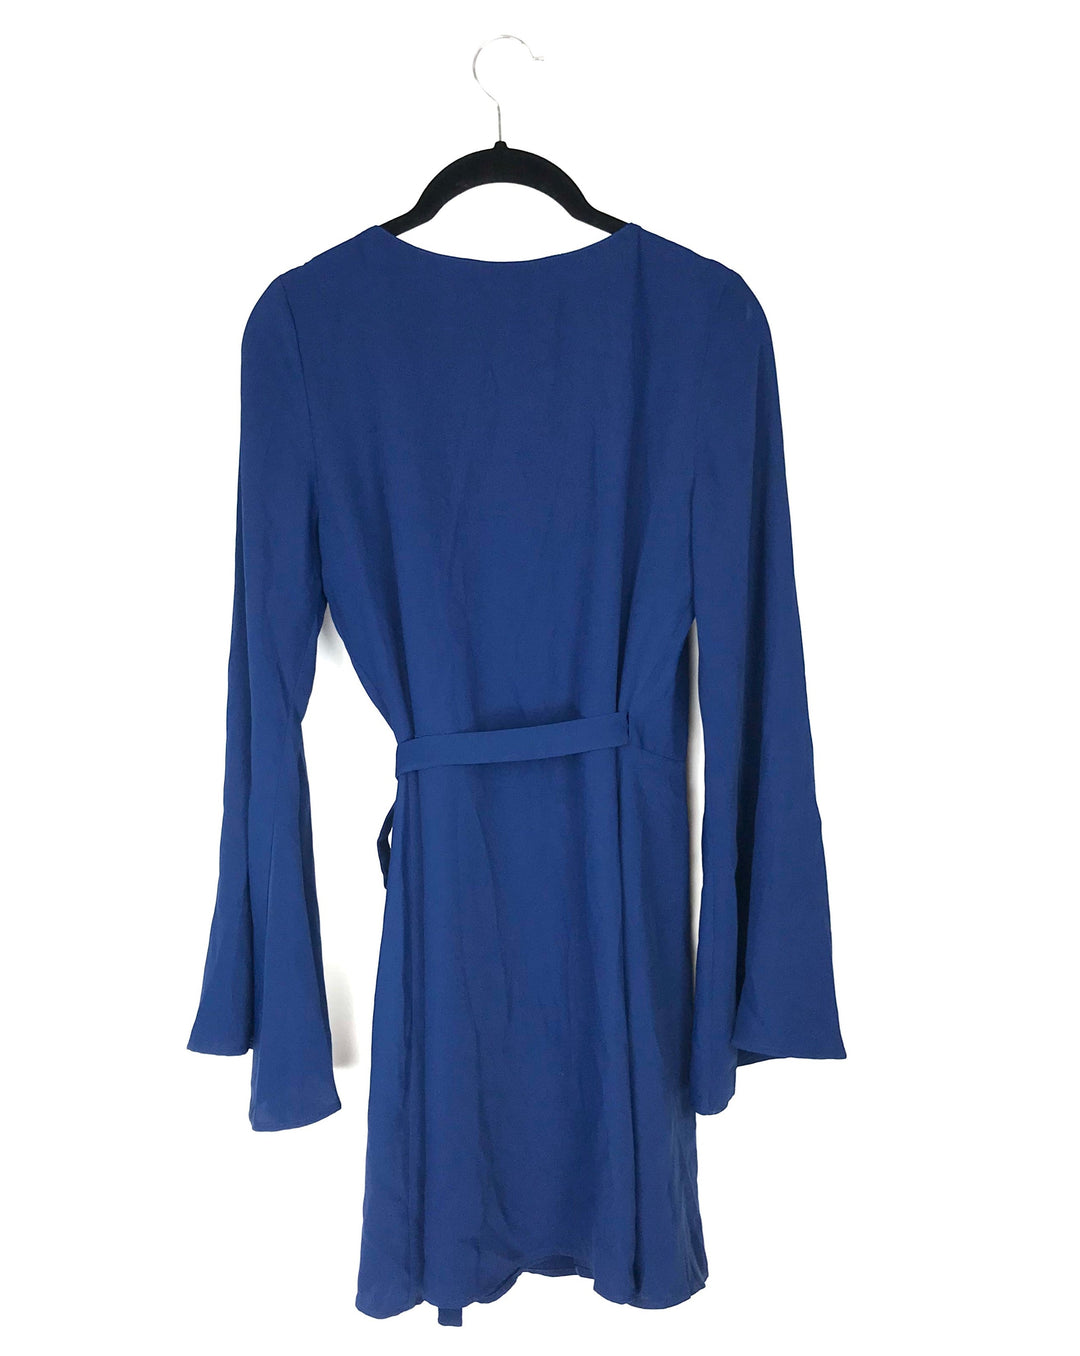 Deep Blue Long Sleeve Dress - Small